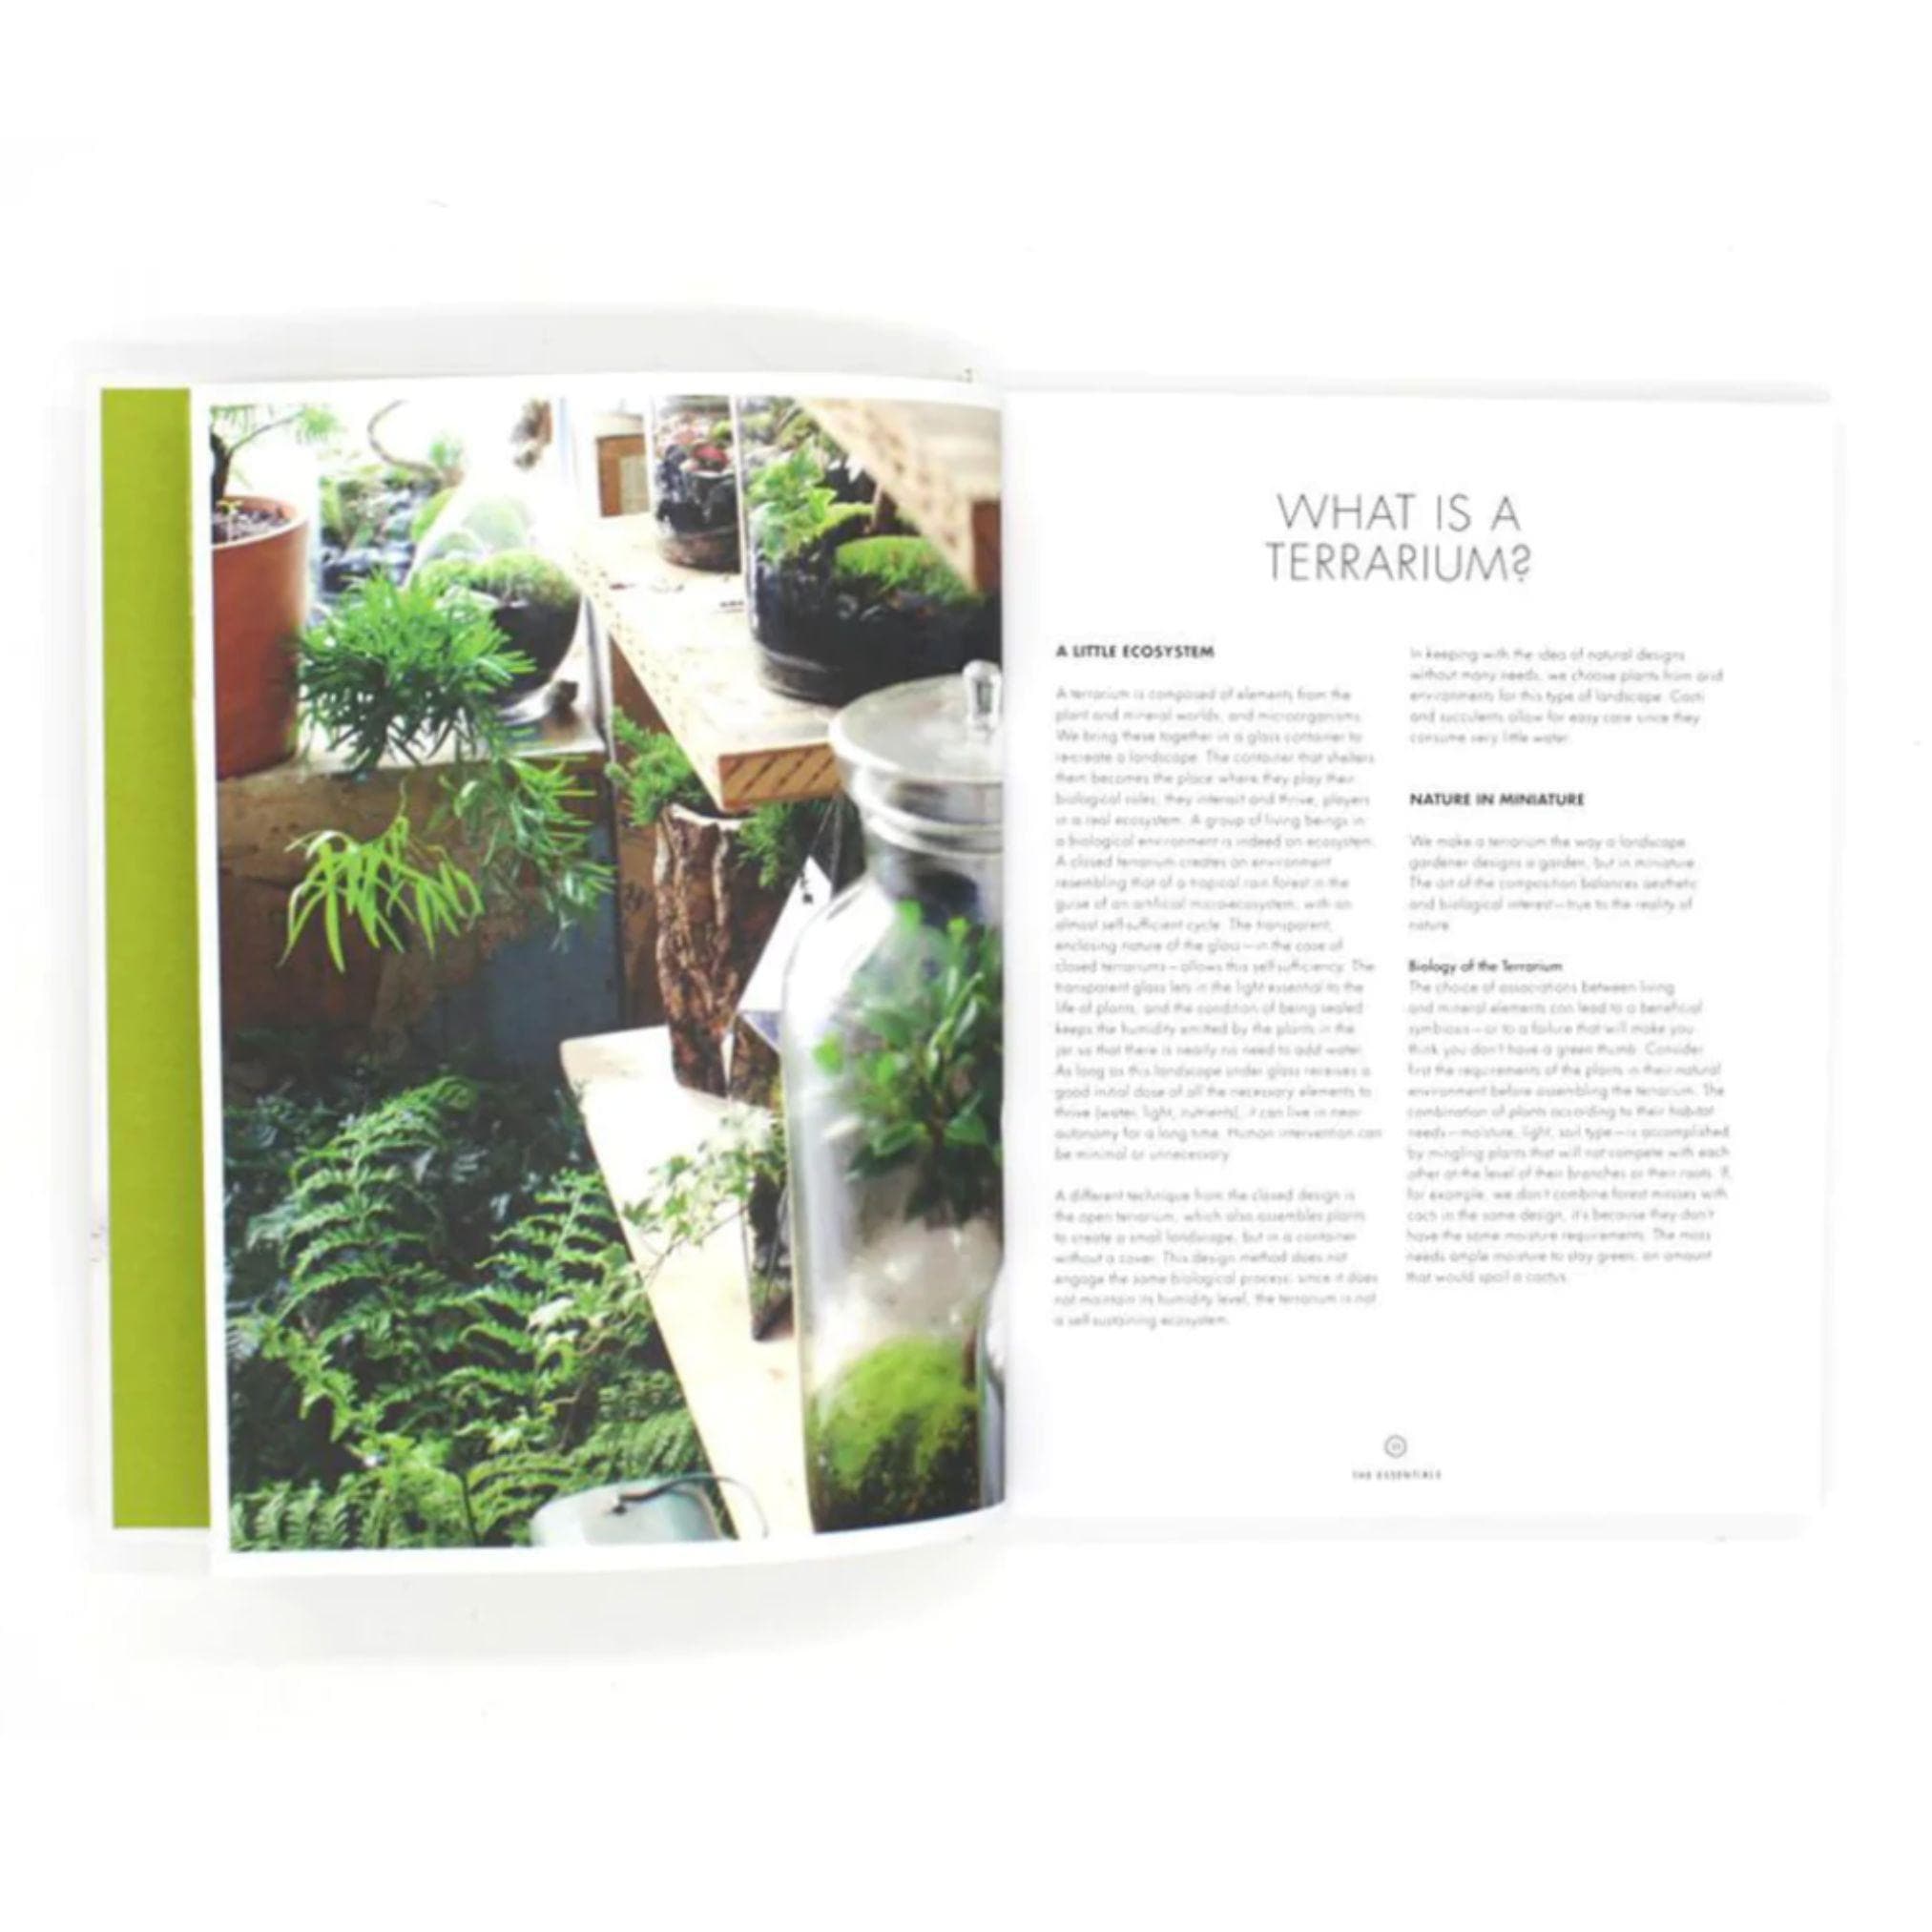 Terrarium: 33 Glass Gardens To Make Your Own - Green Fresh Florals + Plants